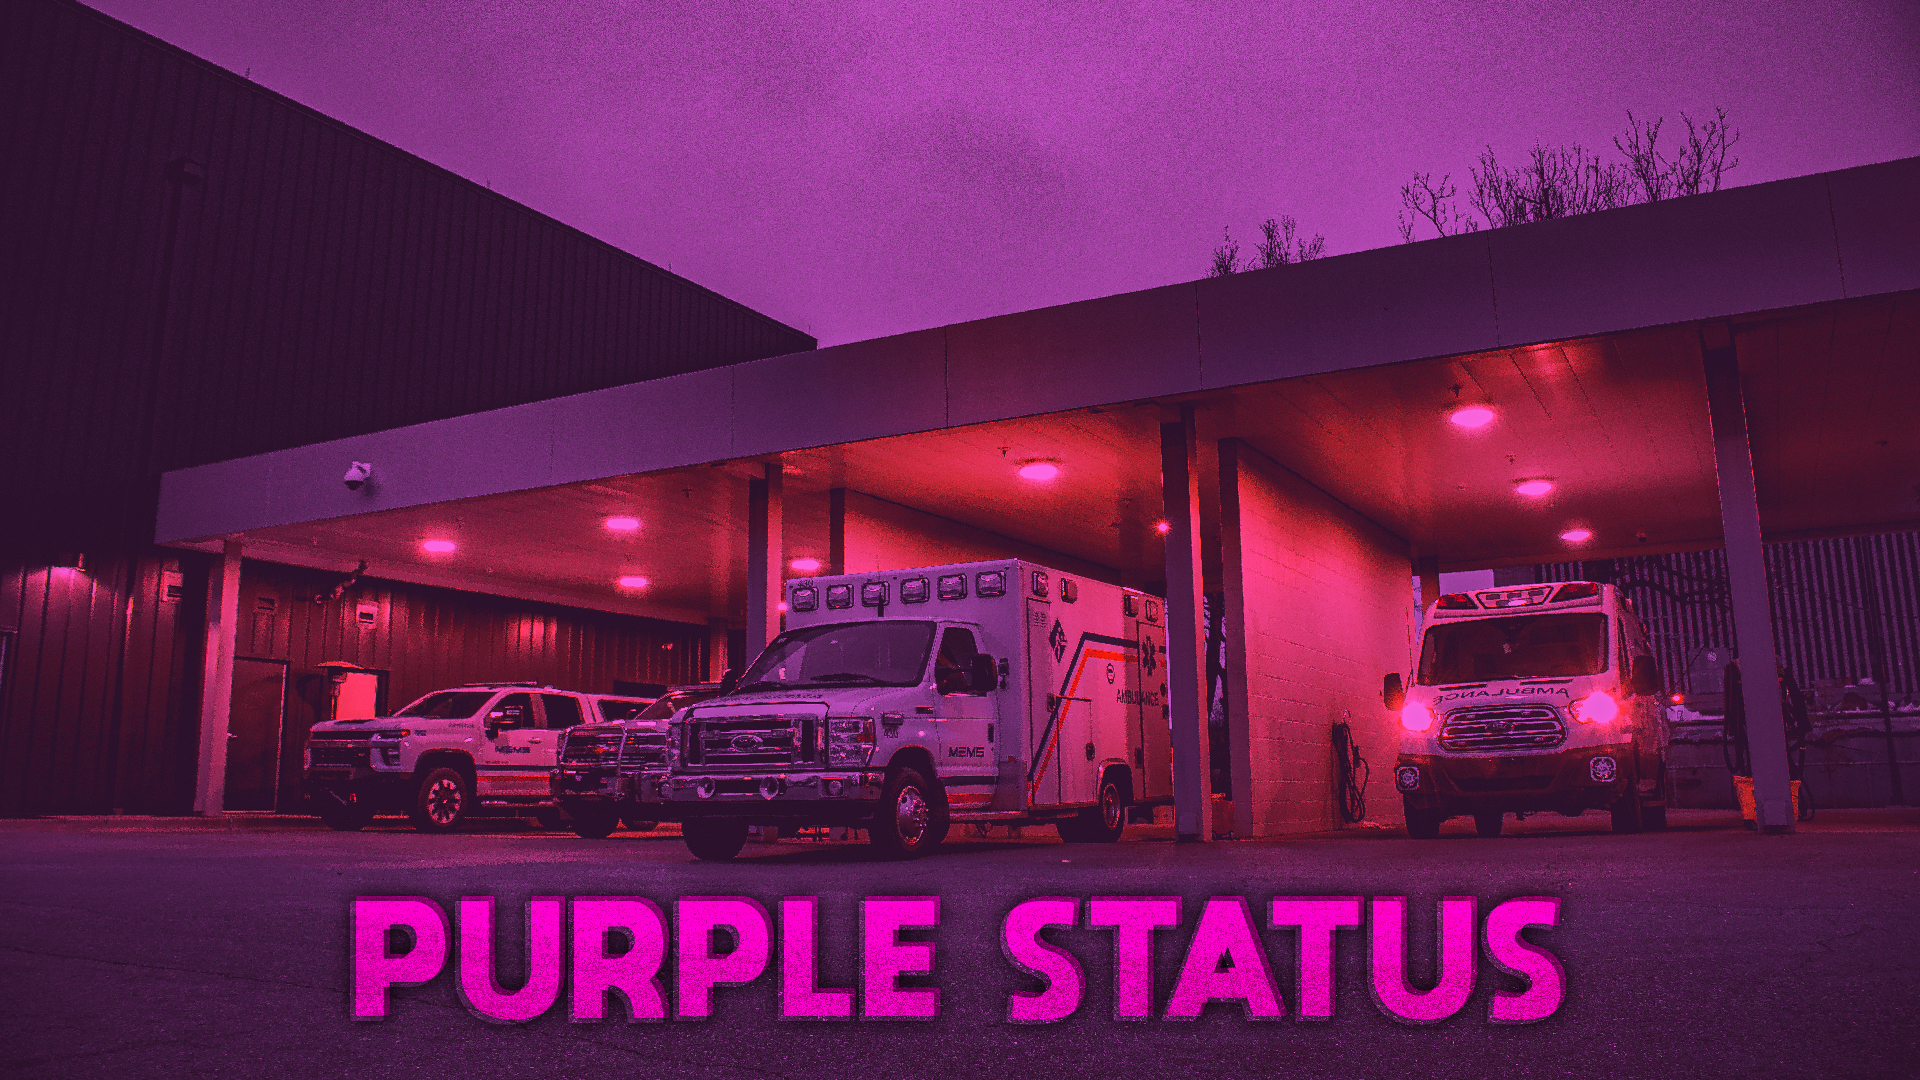 MEMS enters Purple-Status in wake of Ice Storm Warning